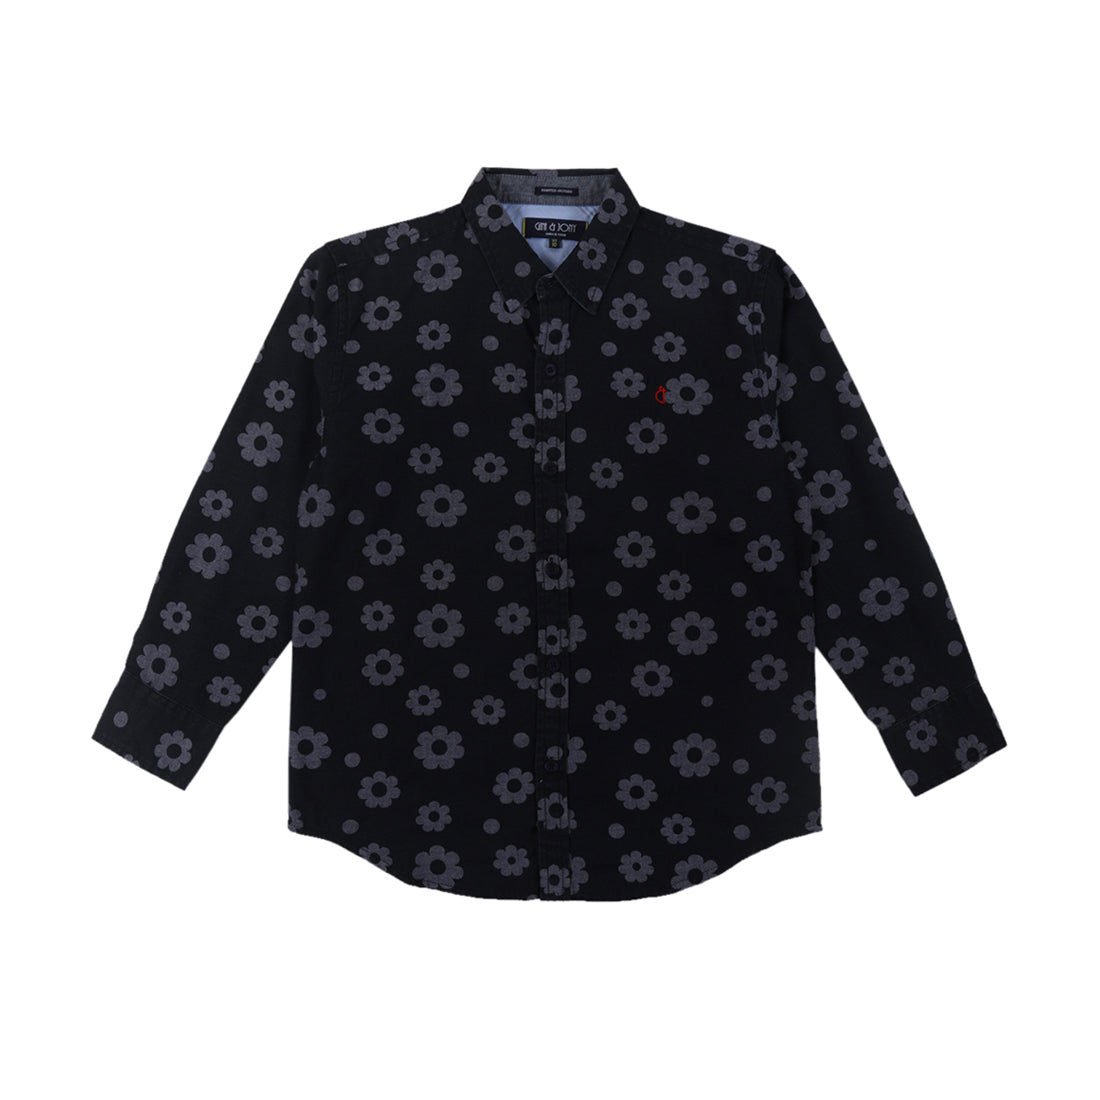 Boys Black Cotton Floral Print Full Sleeves Shirt